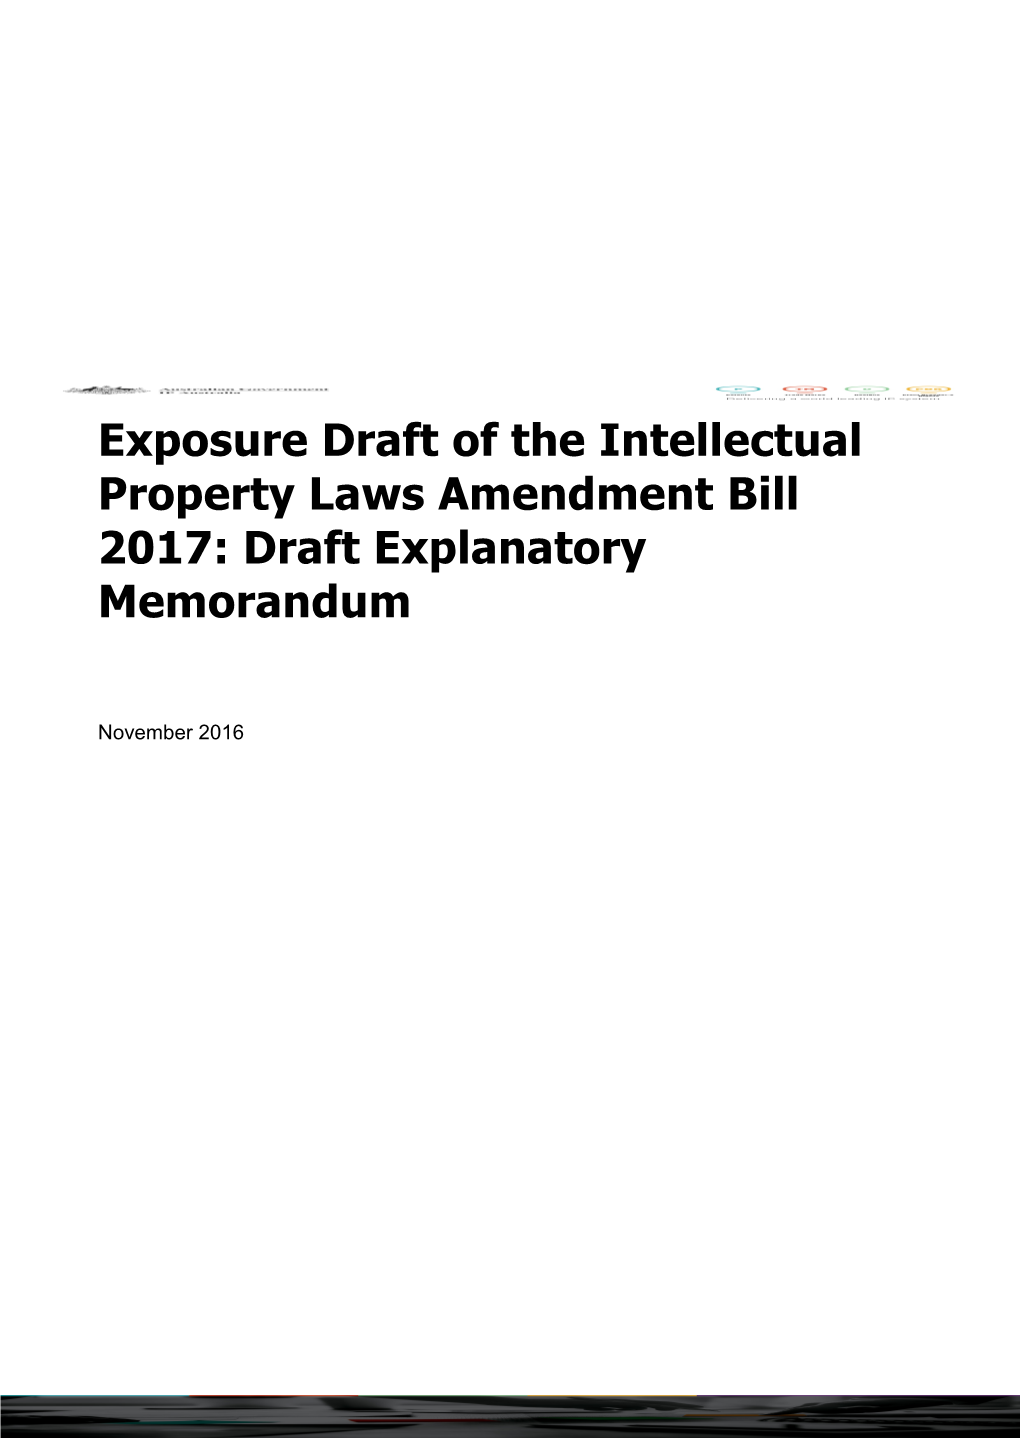 Exposure Draft of the Intellectual Property Laws Amendment Bill 2017: Draft Explanatory